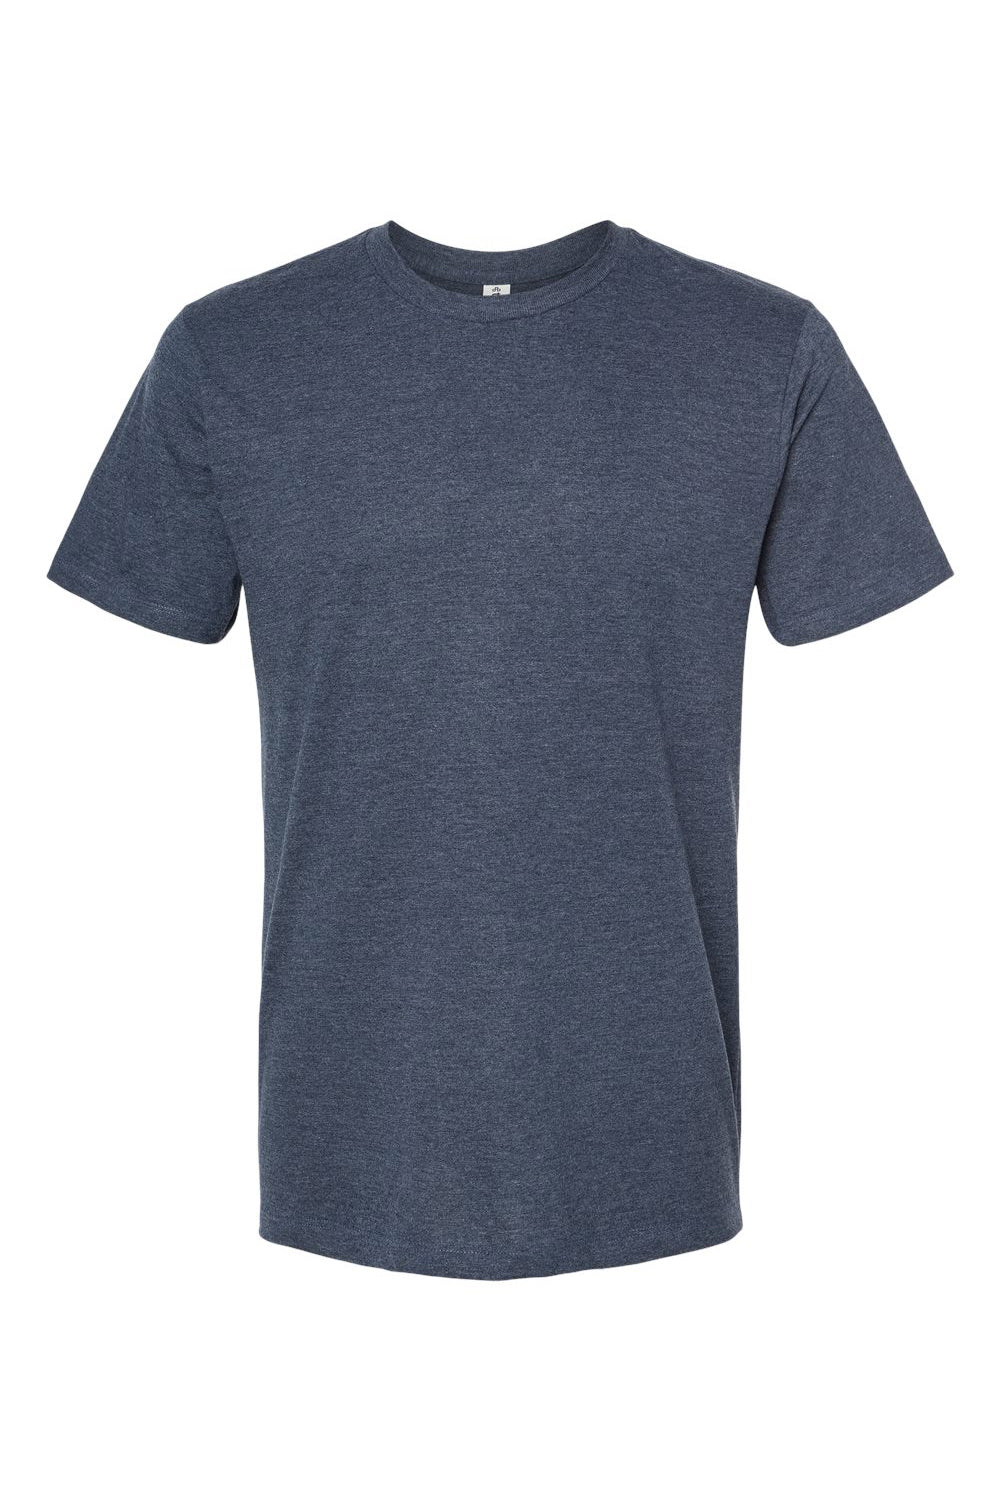 Tultex 541 Mens Premium Short Sleeve Crewneck T-Shirt Heather Navy Blue Flat Front